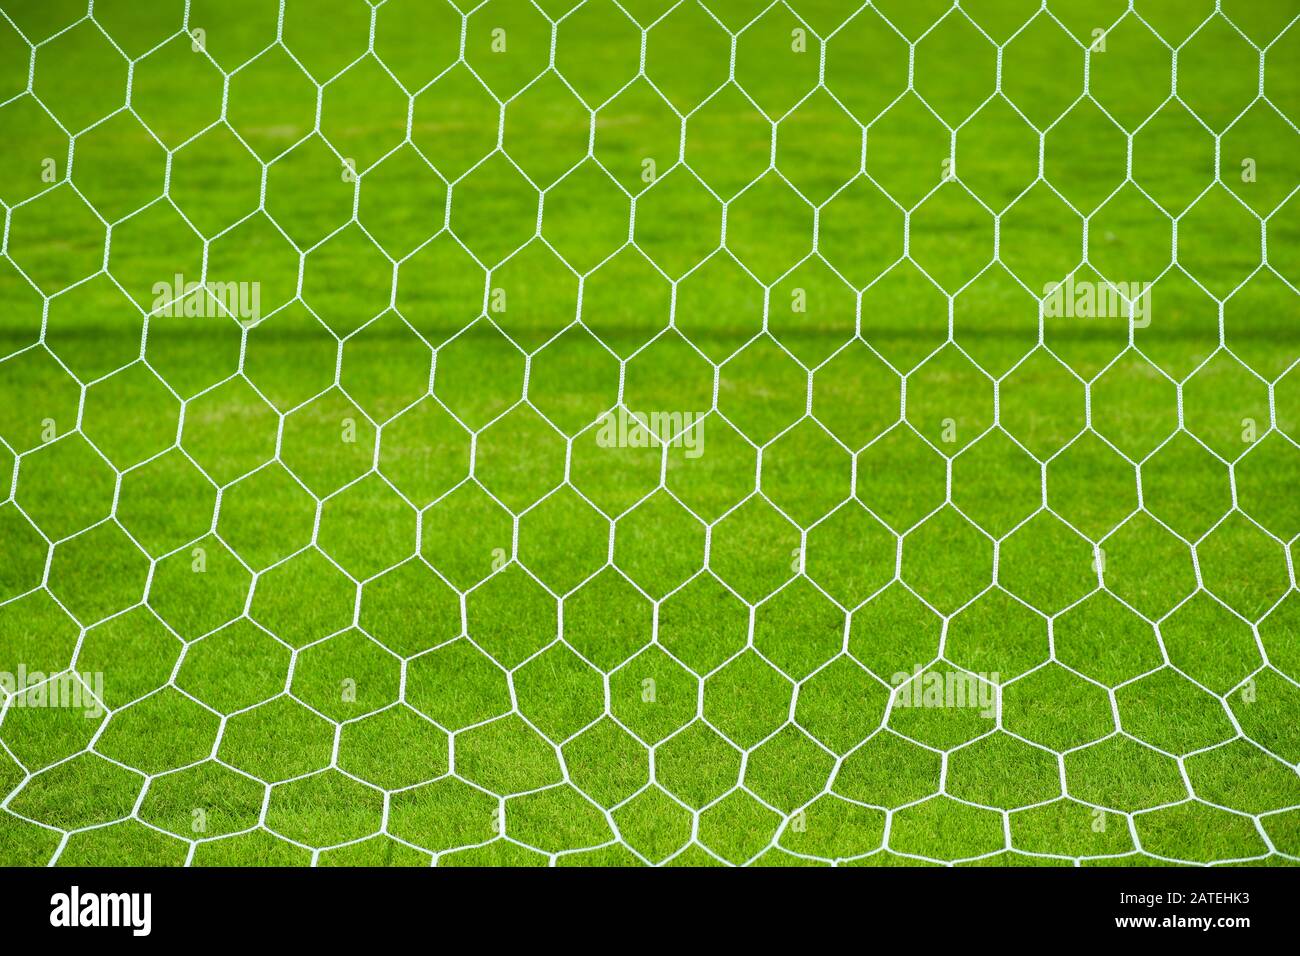 Fußballtornetz auf Rasenplatz Stockfoto